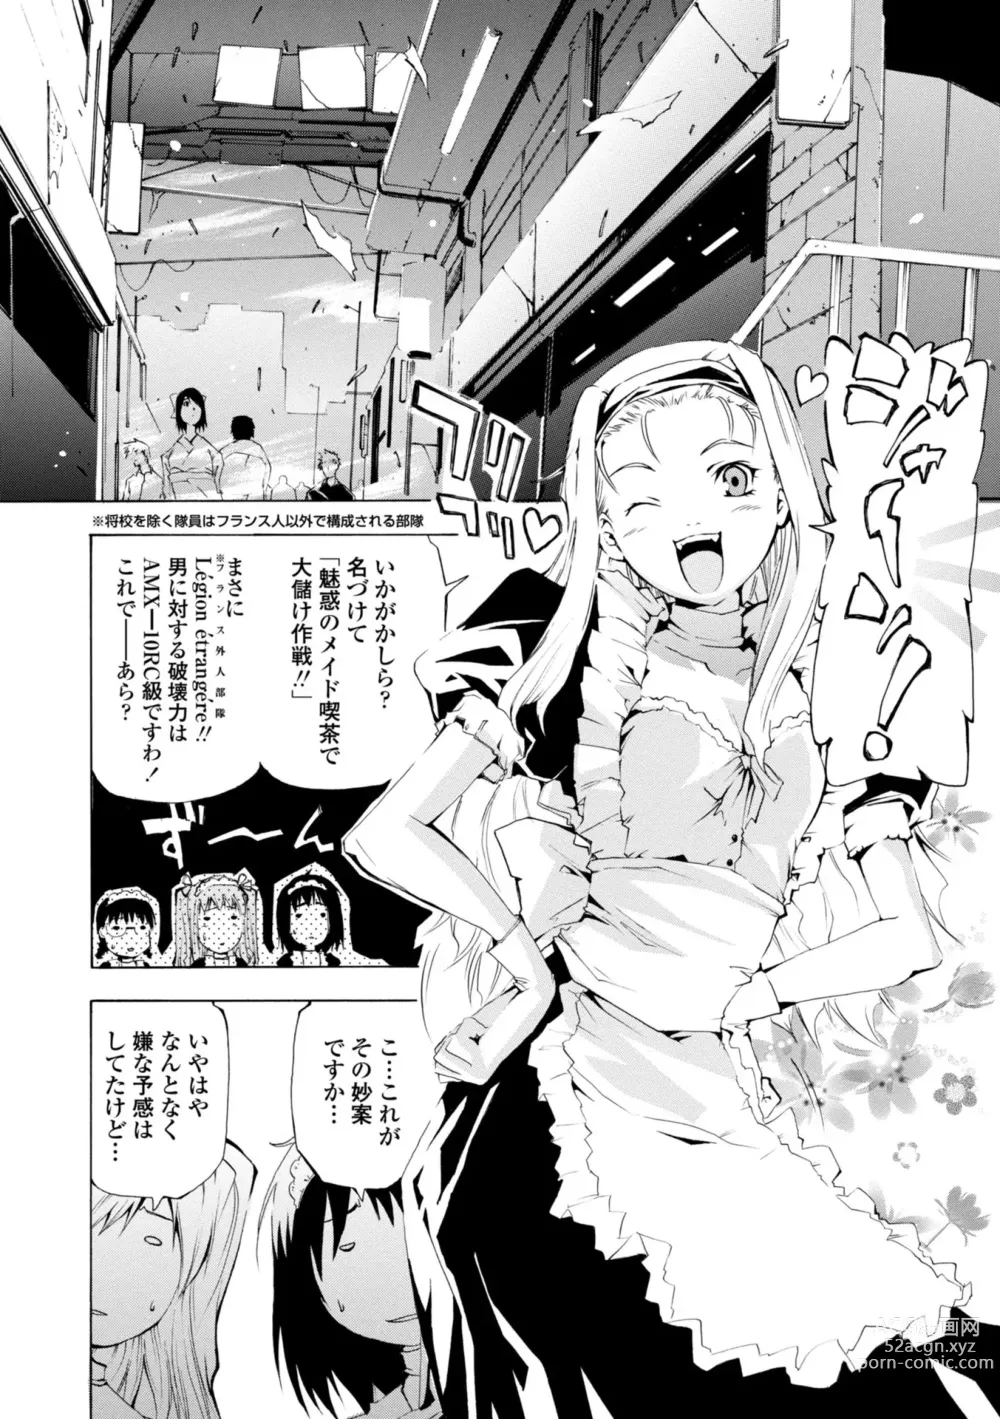 Page 6 of manga Houga Ge